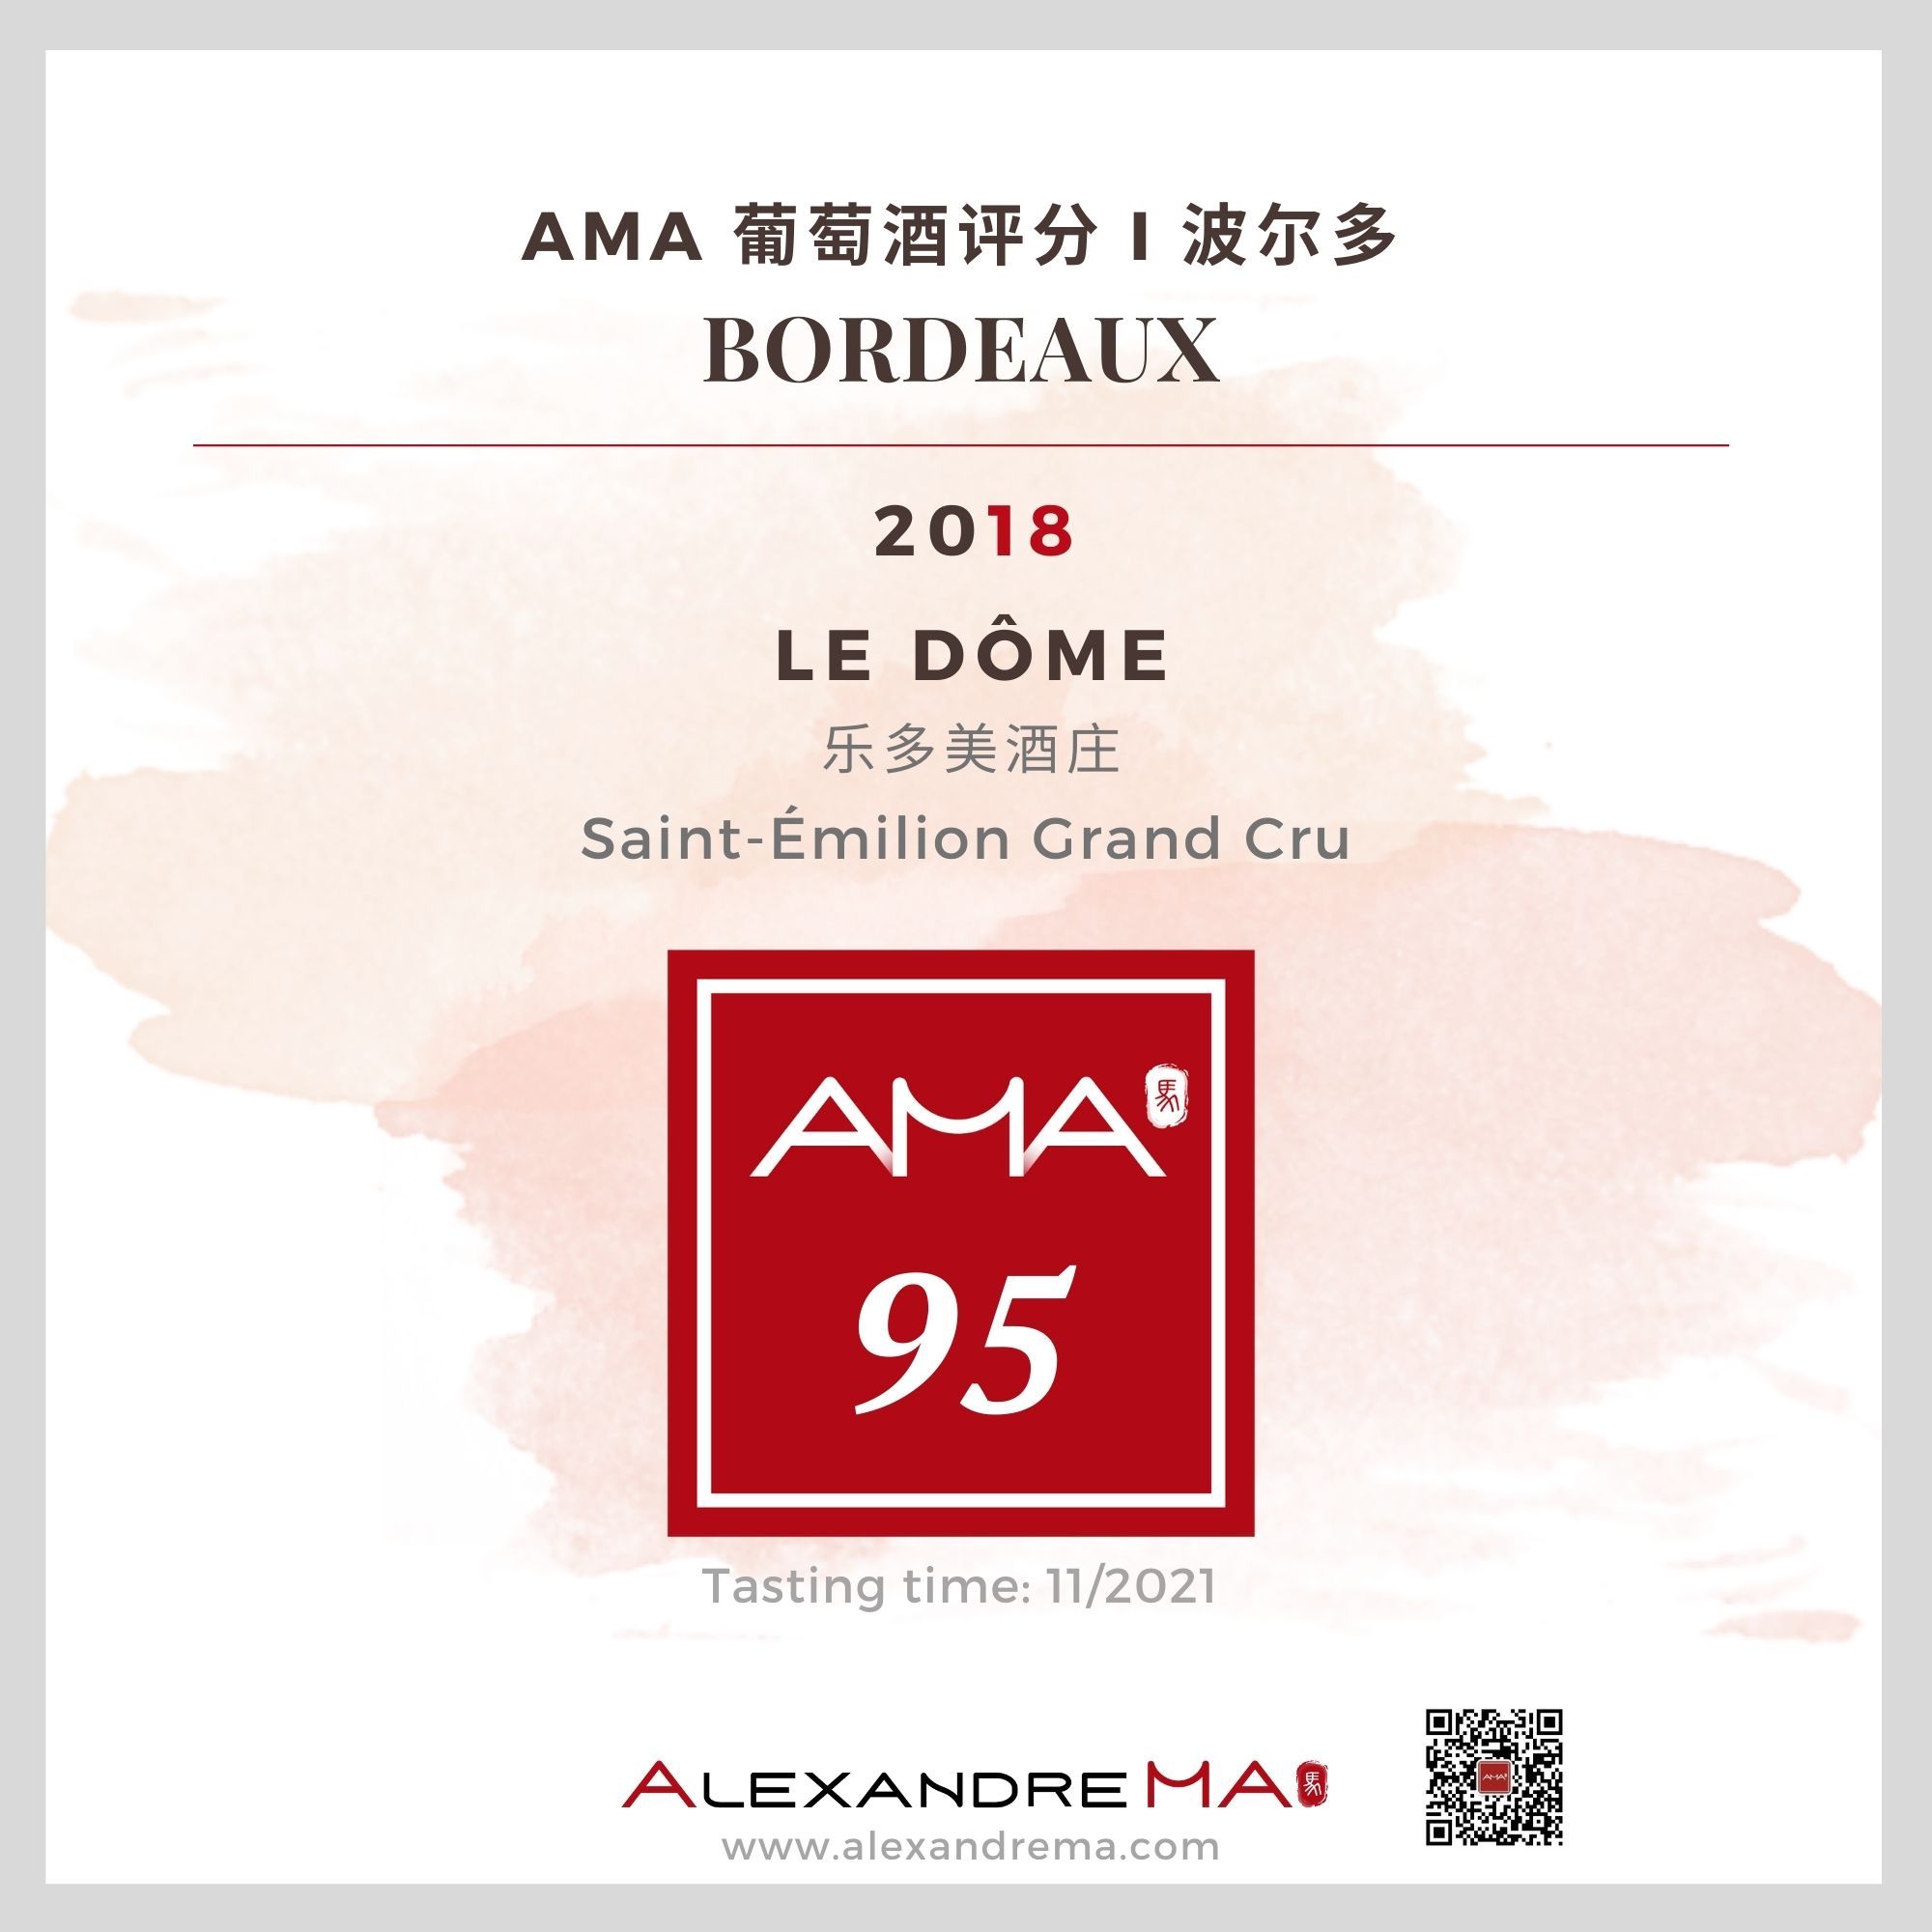 Le Dôme 2018 乐多美酒庄 - Alexandre Ma